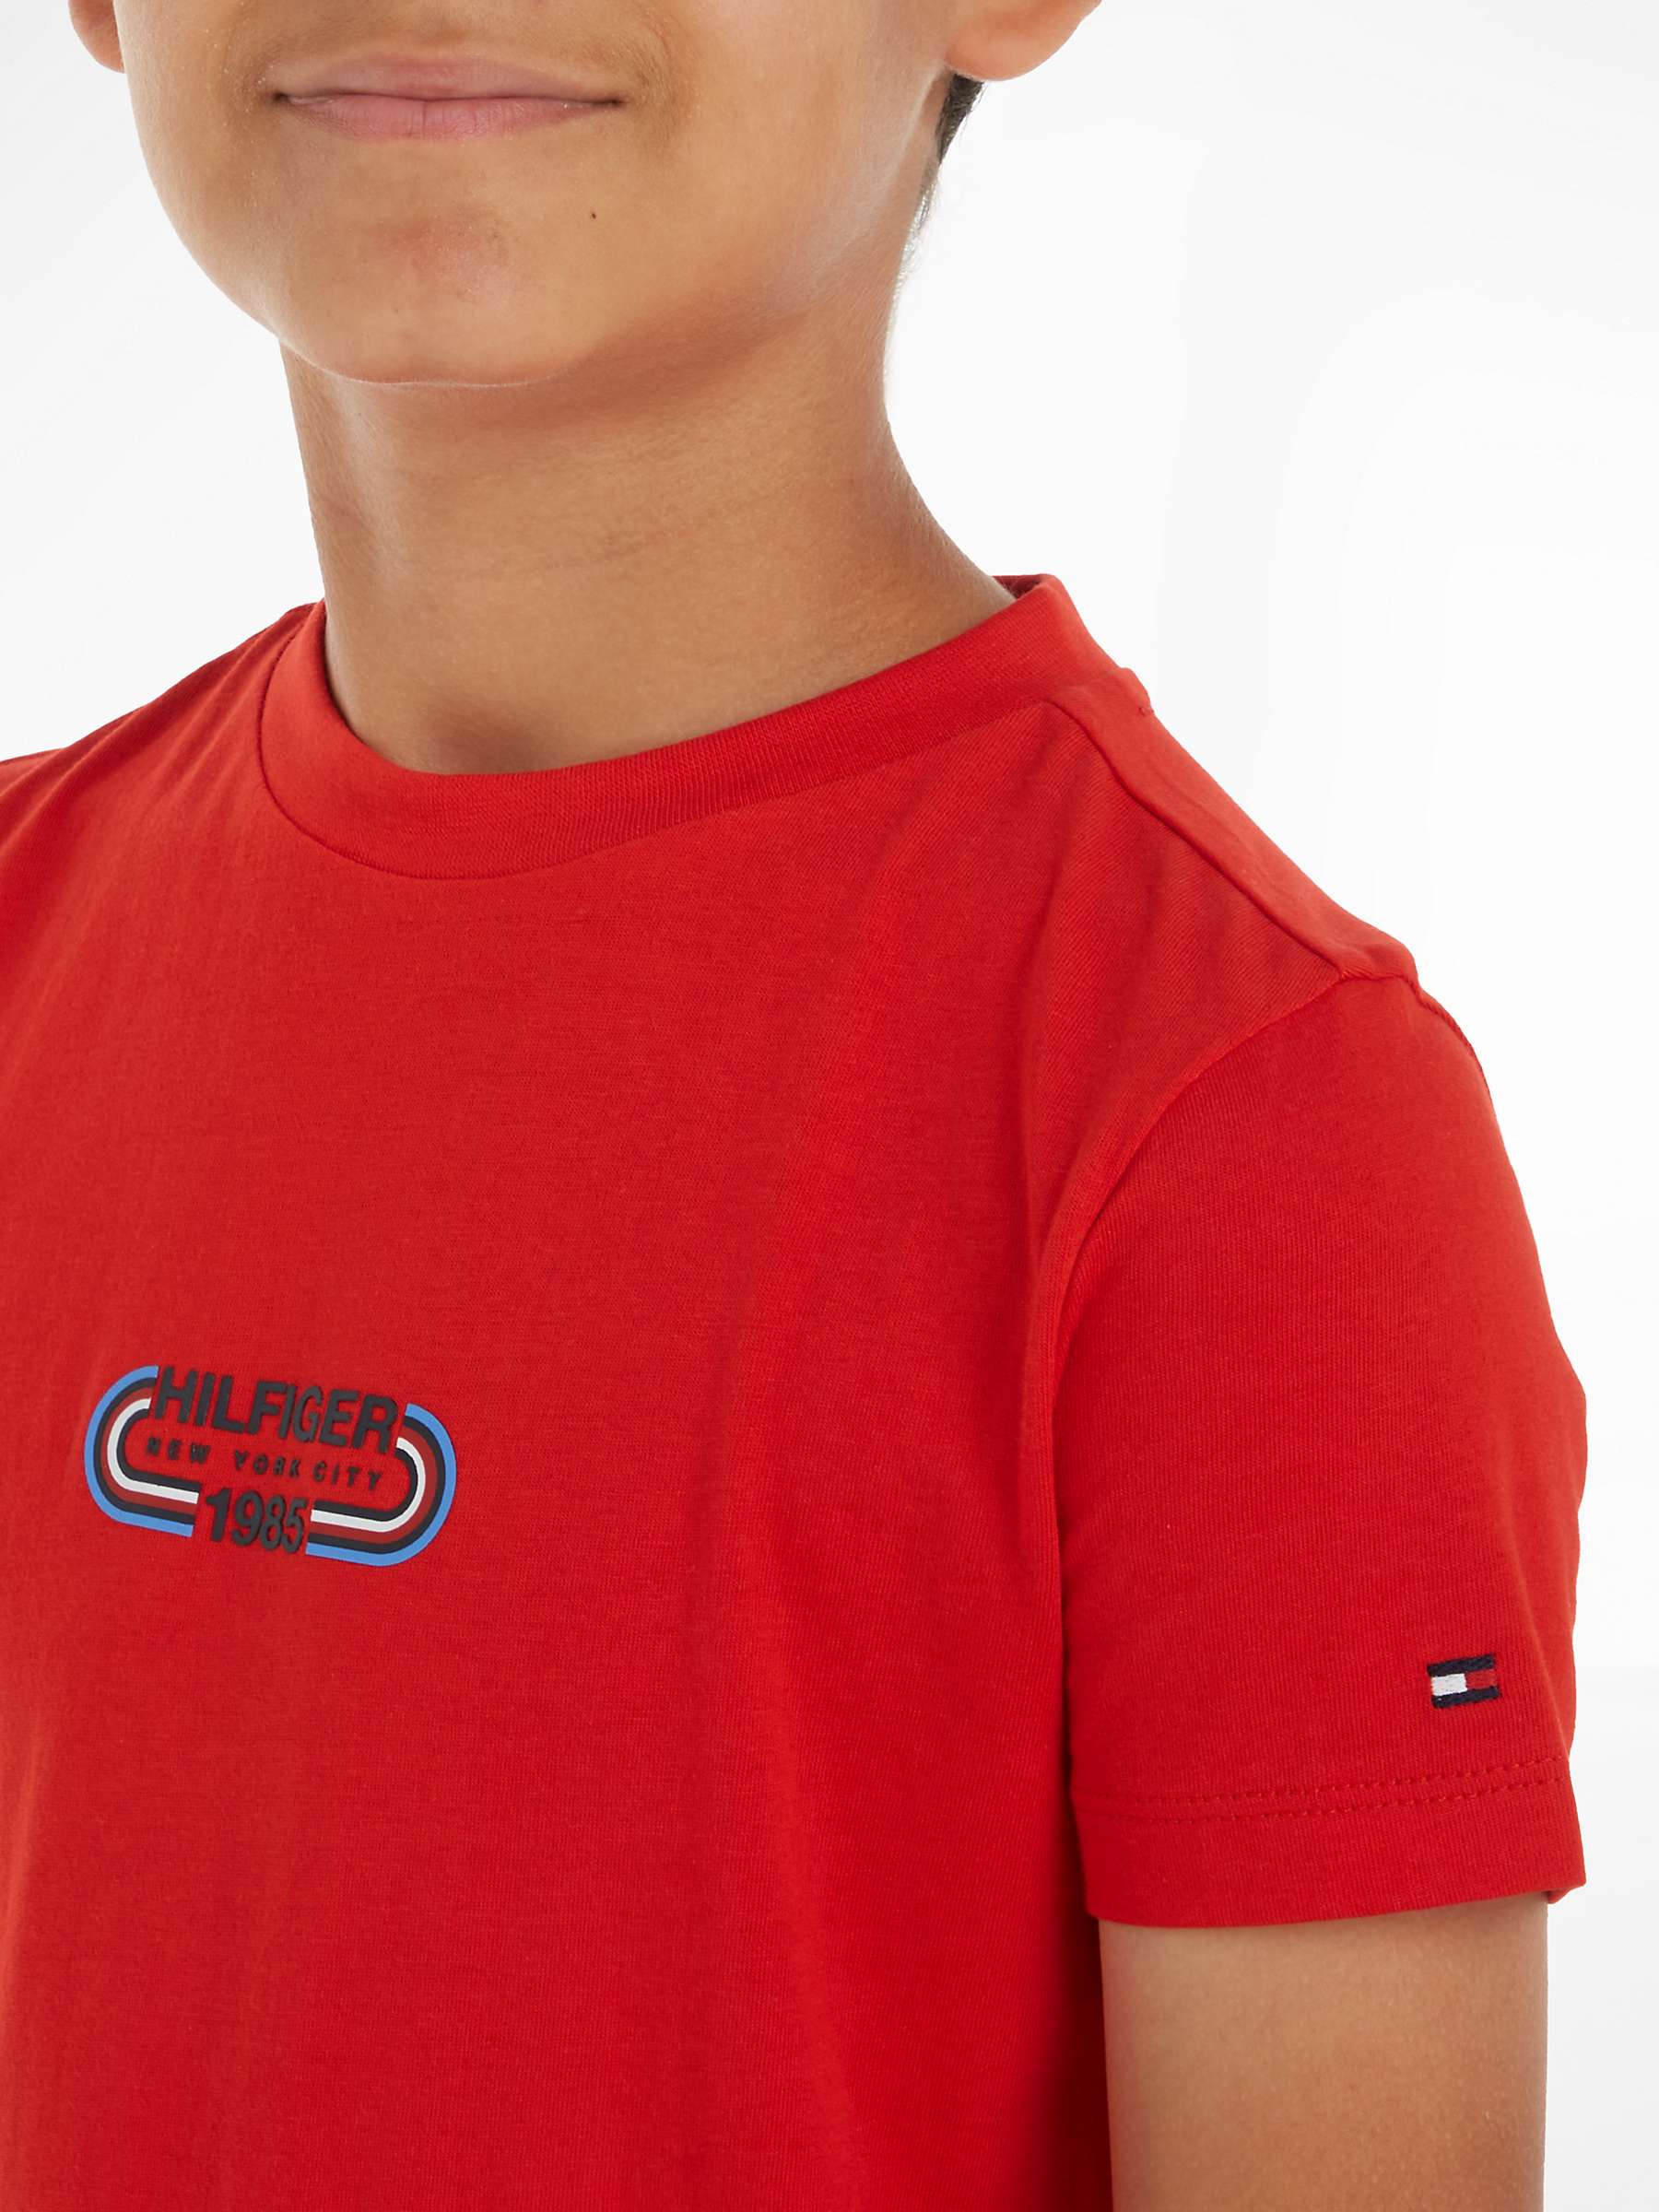 Buy Tommy Hilfiger Kids' Track Graphic T-Shirt Online at johnlewis.com